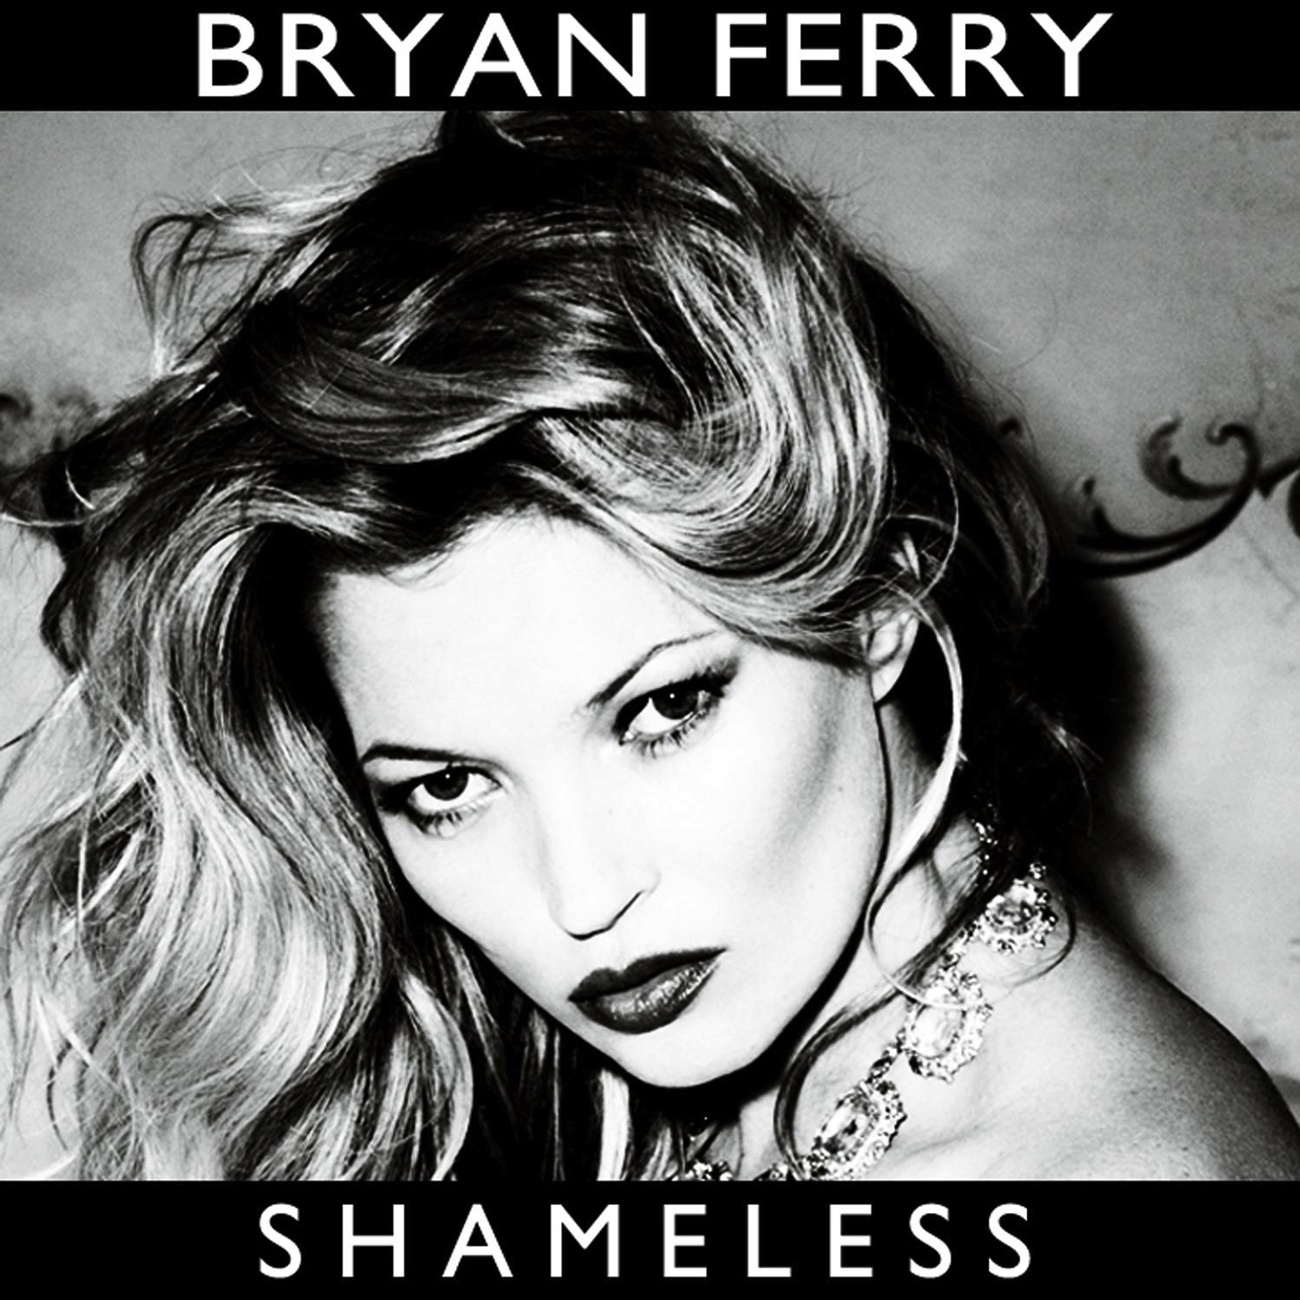 Shameless (Mylo Remix)